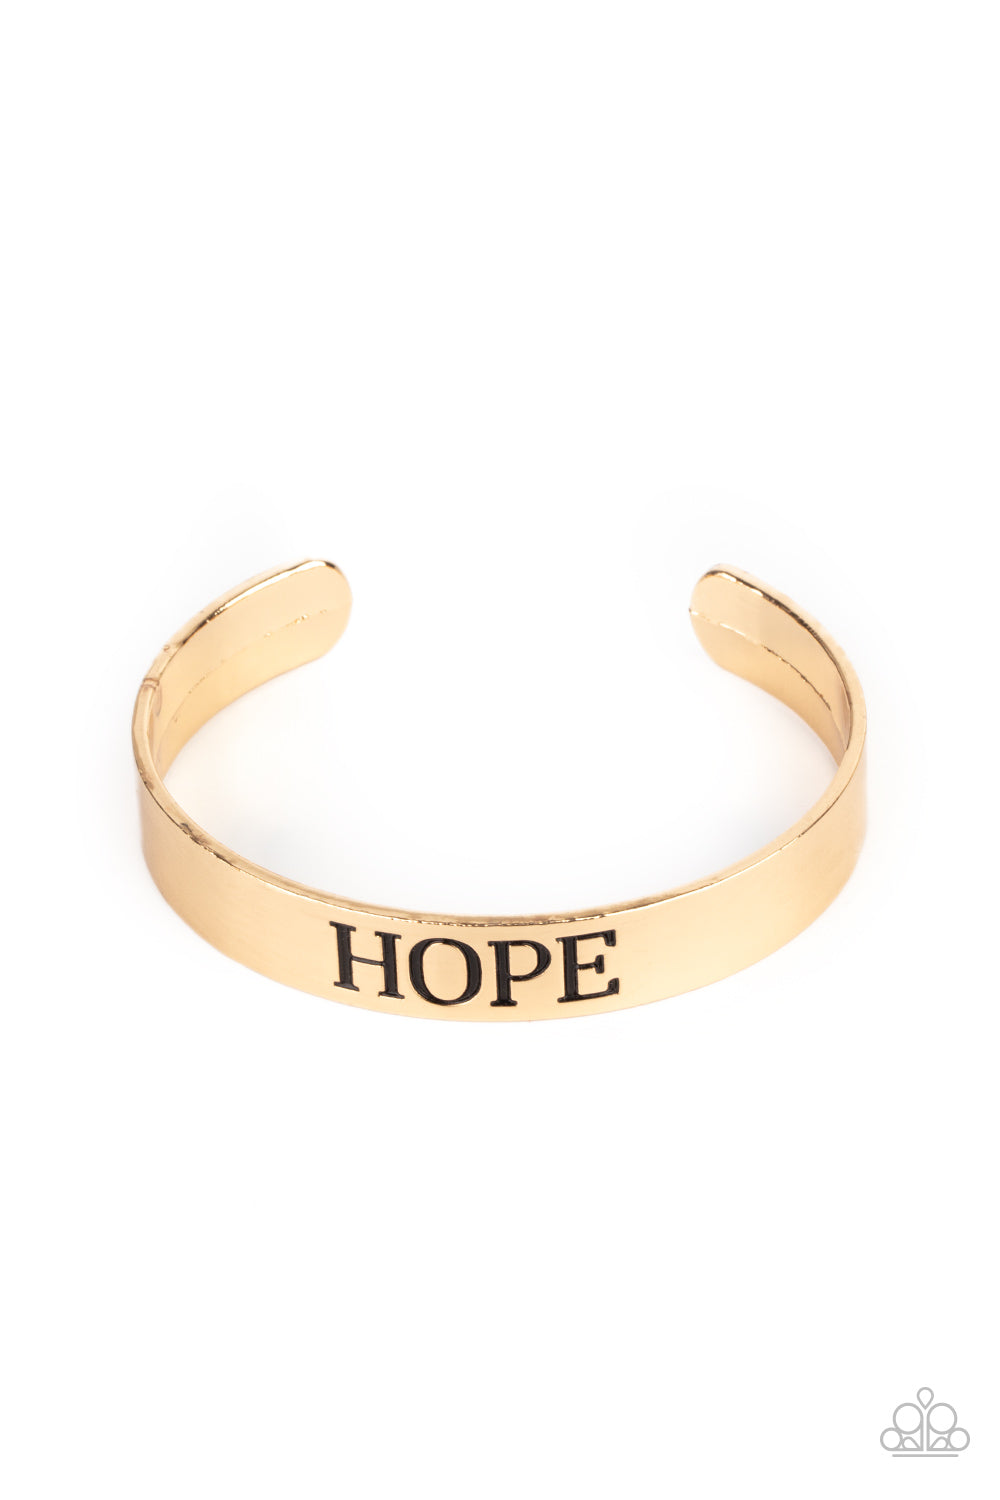 Hope Makes The World Go Round - Gold bracelets